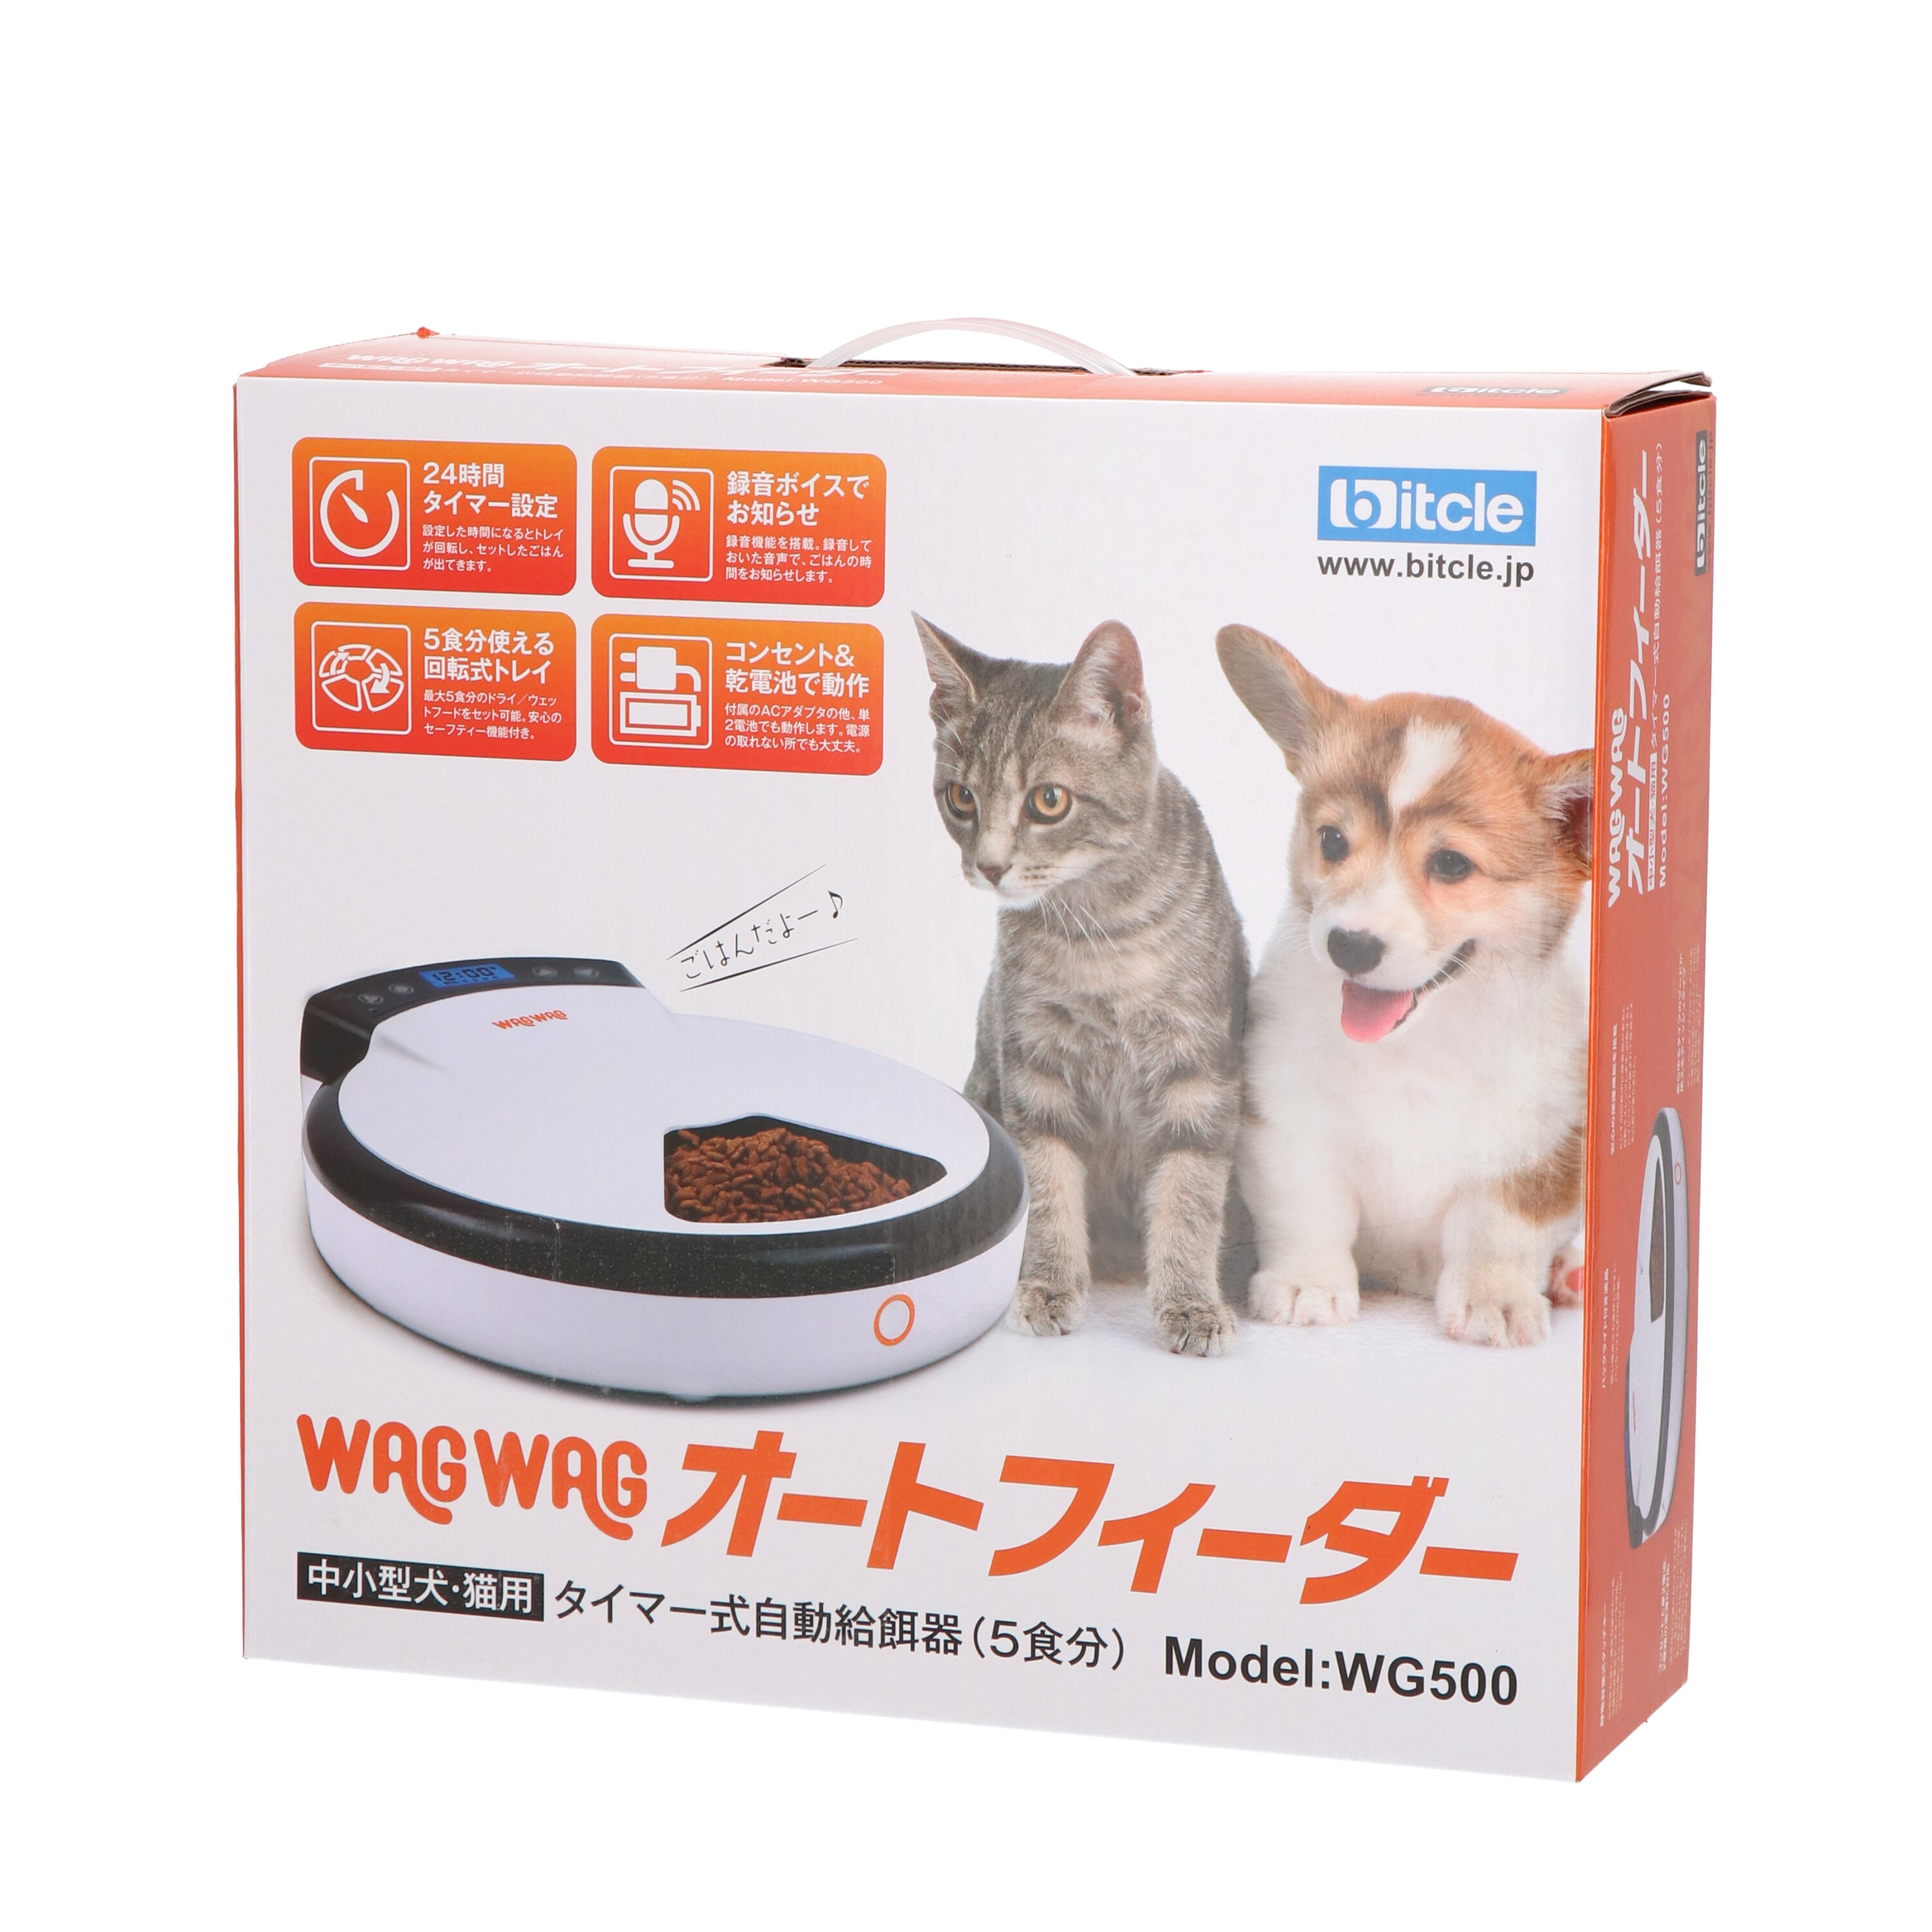 WAGWAG オートフィーダー WG500 餌やり器 猫 犬